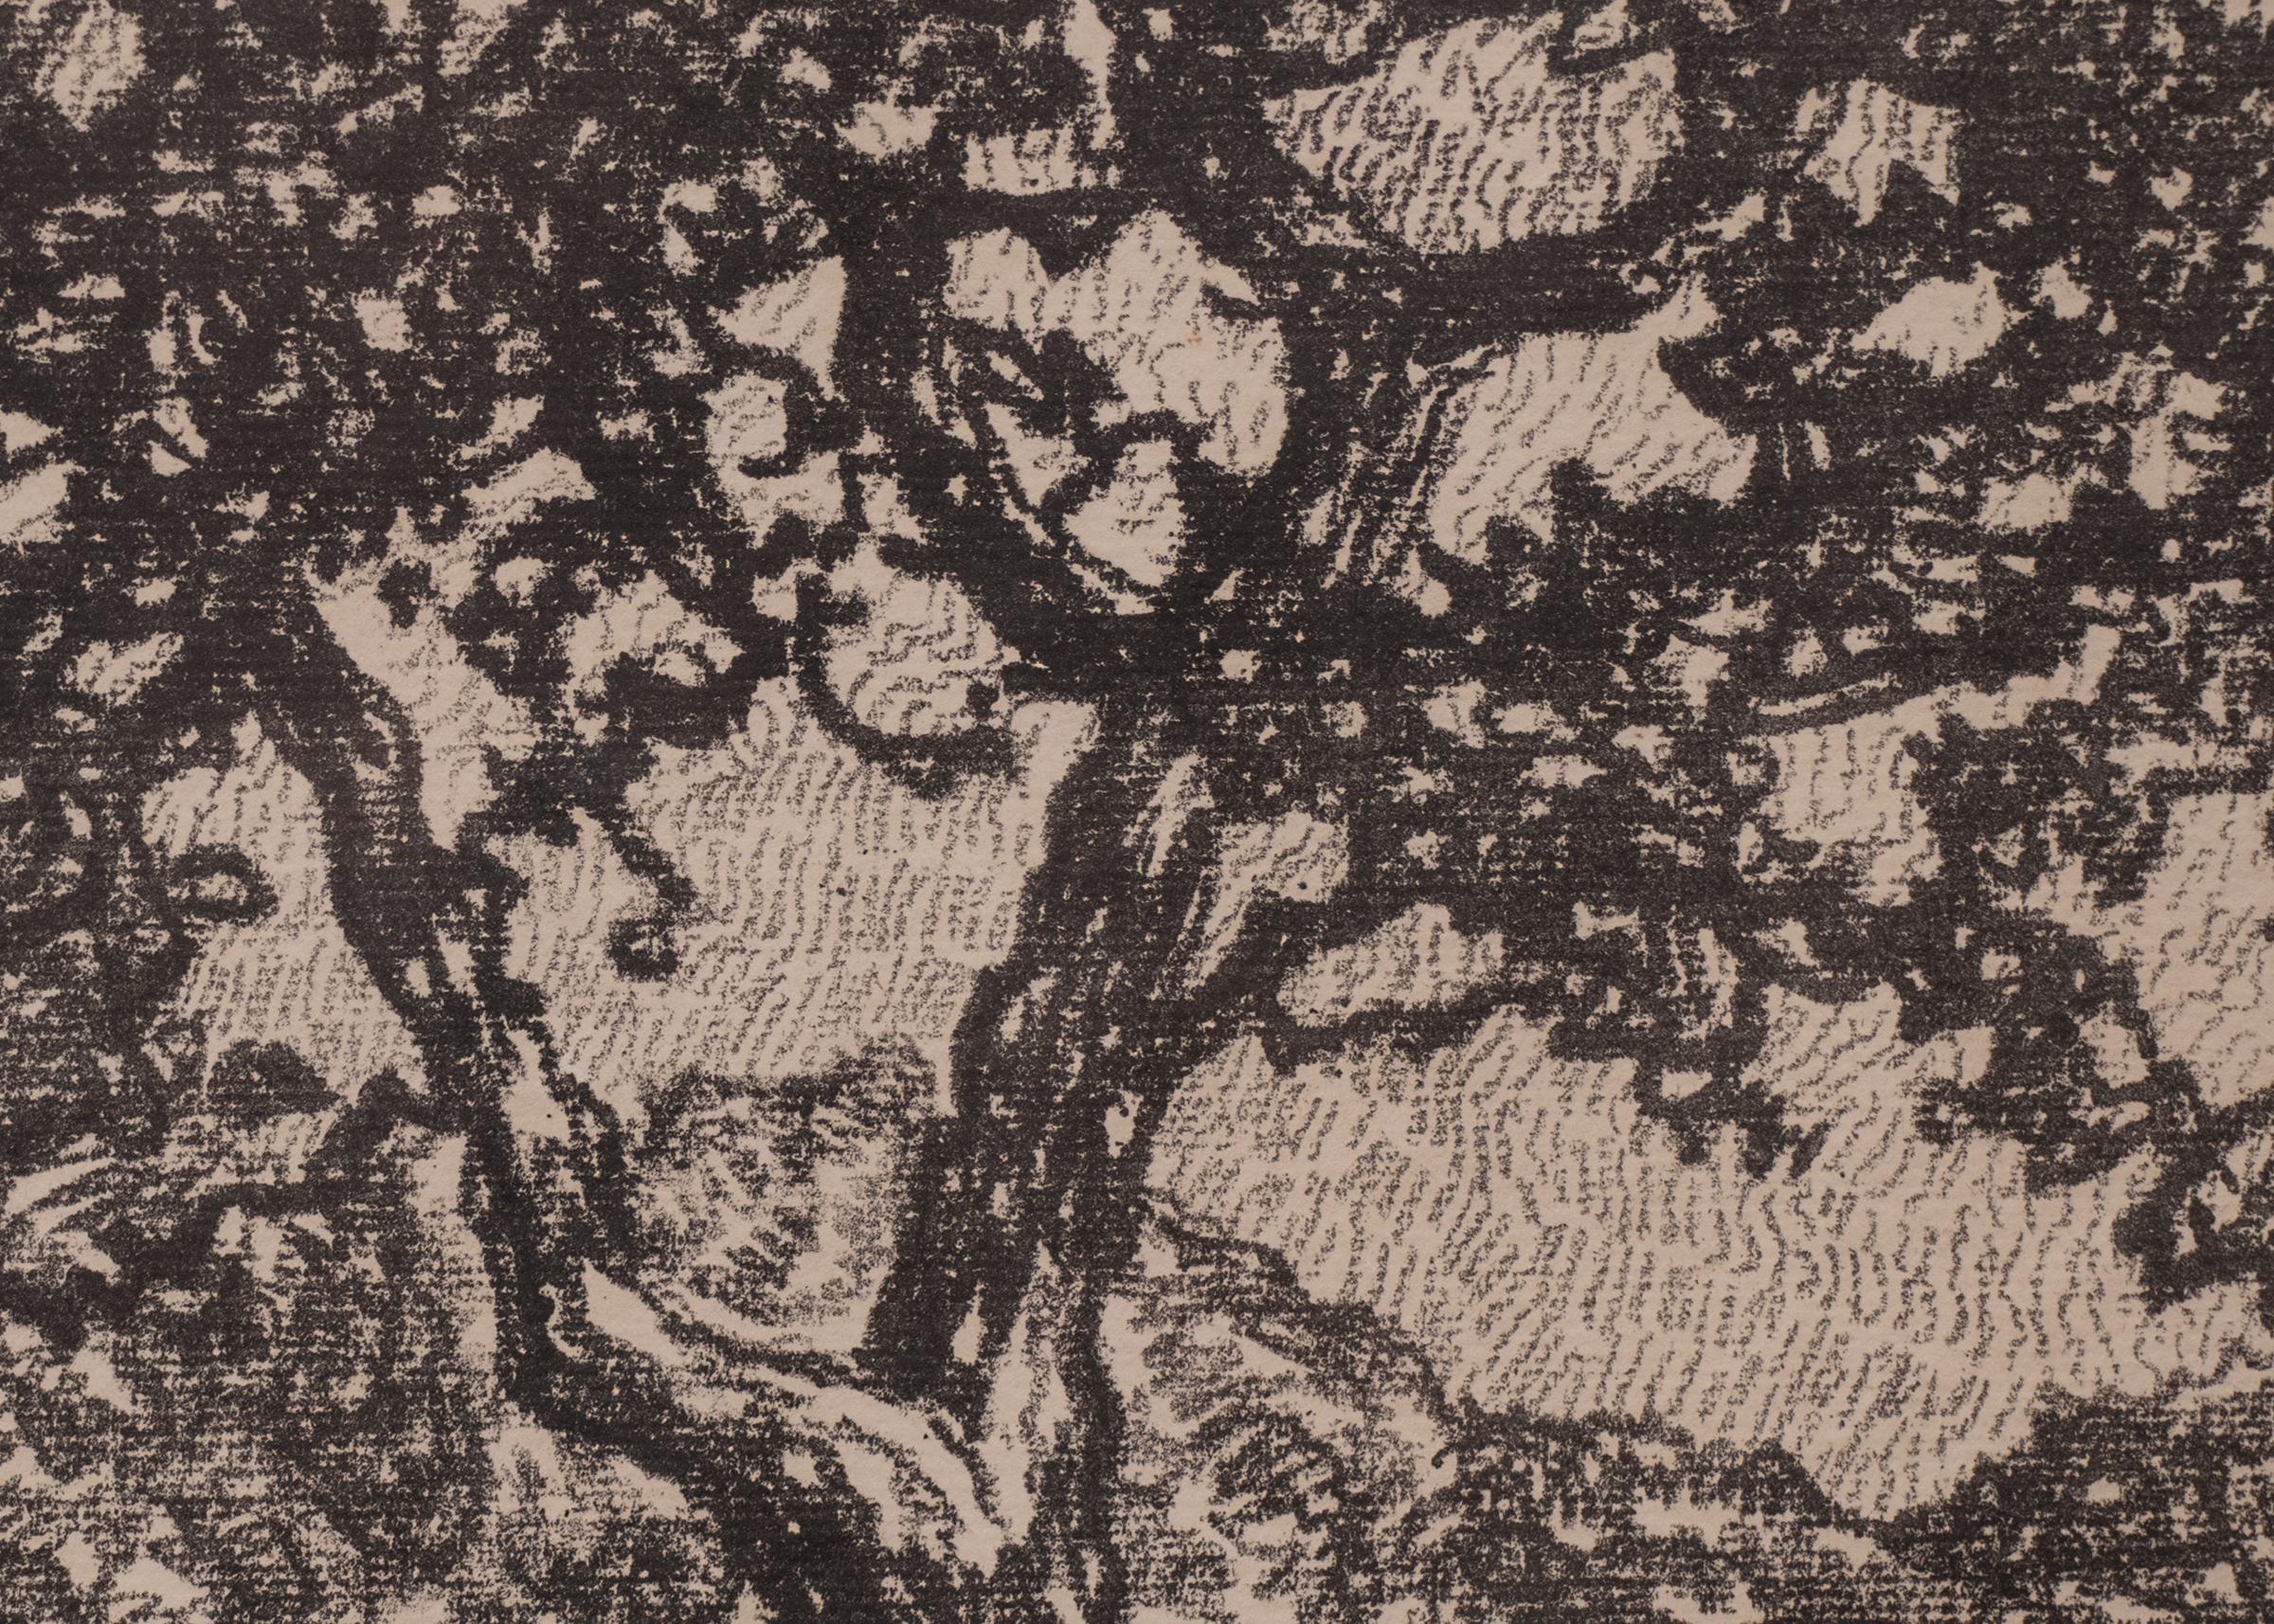 River Motif, 1918 Original Black and White Lithograph Kansas Landscape Trees - American Modern Print by Birger Sandzen